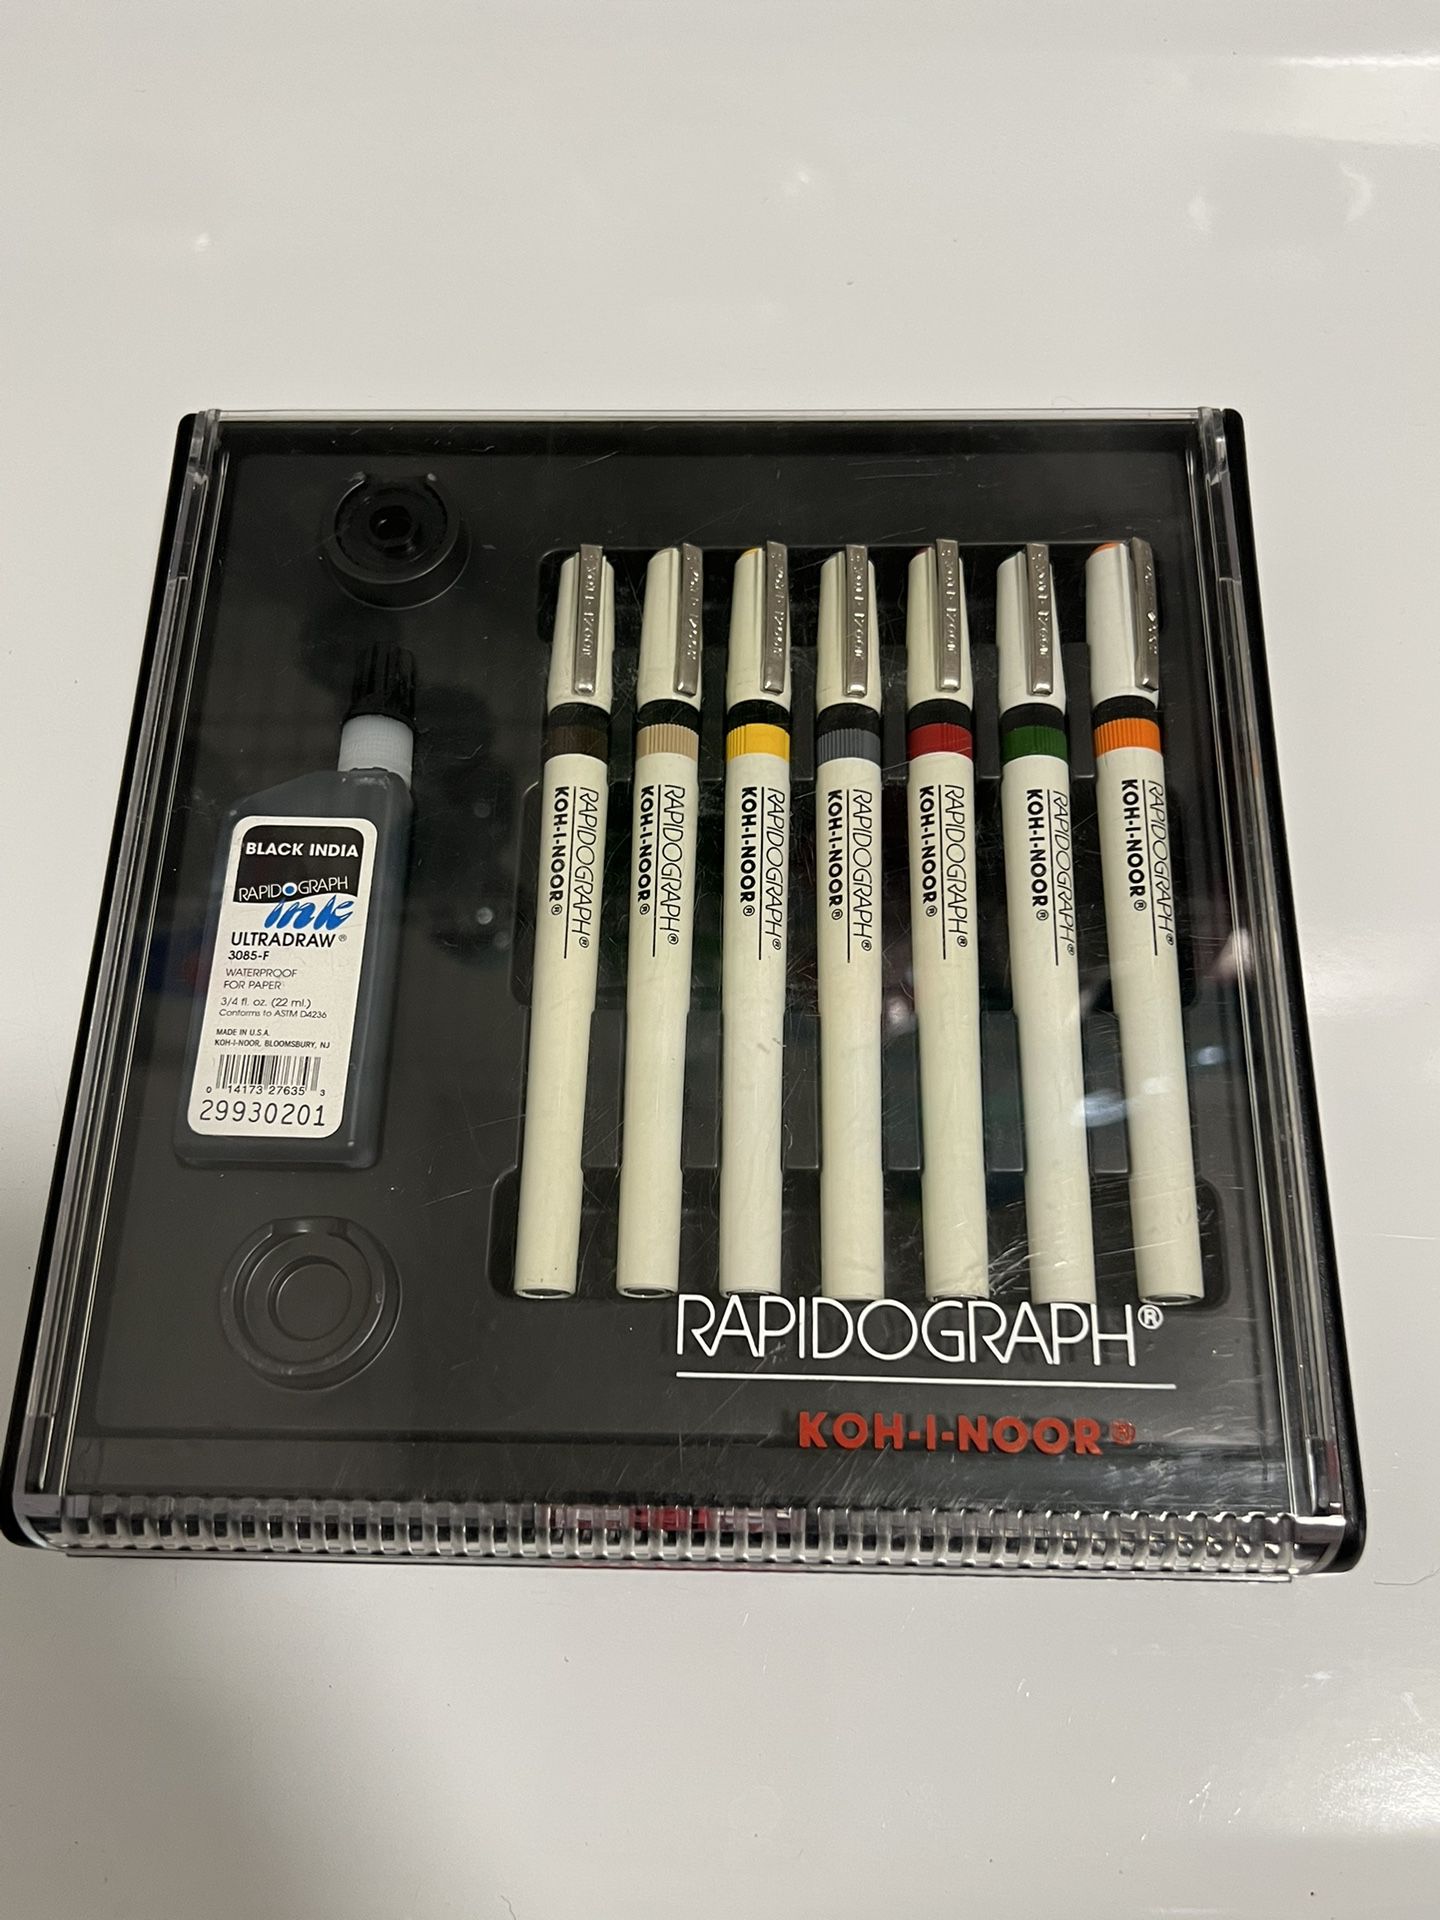 Koh-I-Noor Rapidograph Pens set for Sale in Albuquerque, NM - OfferUp